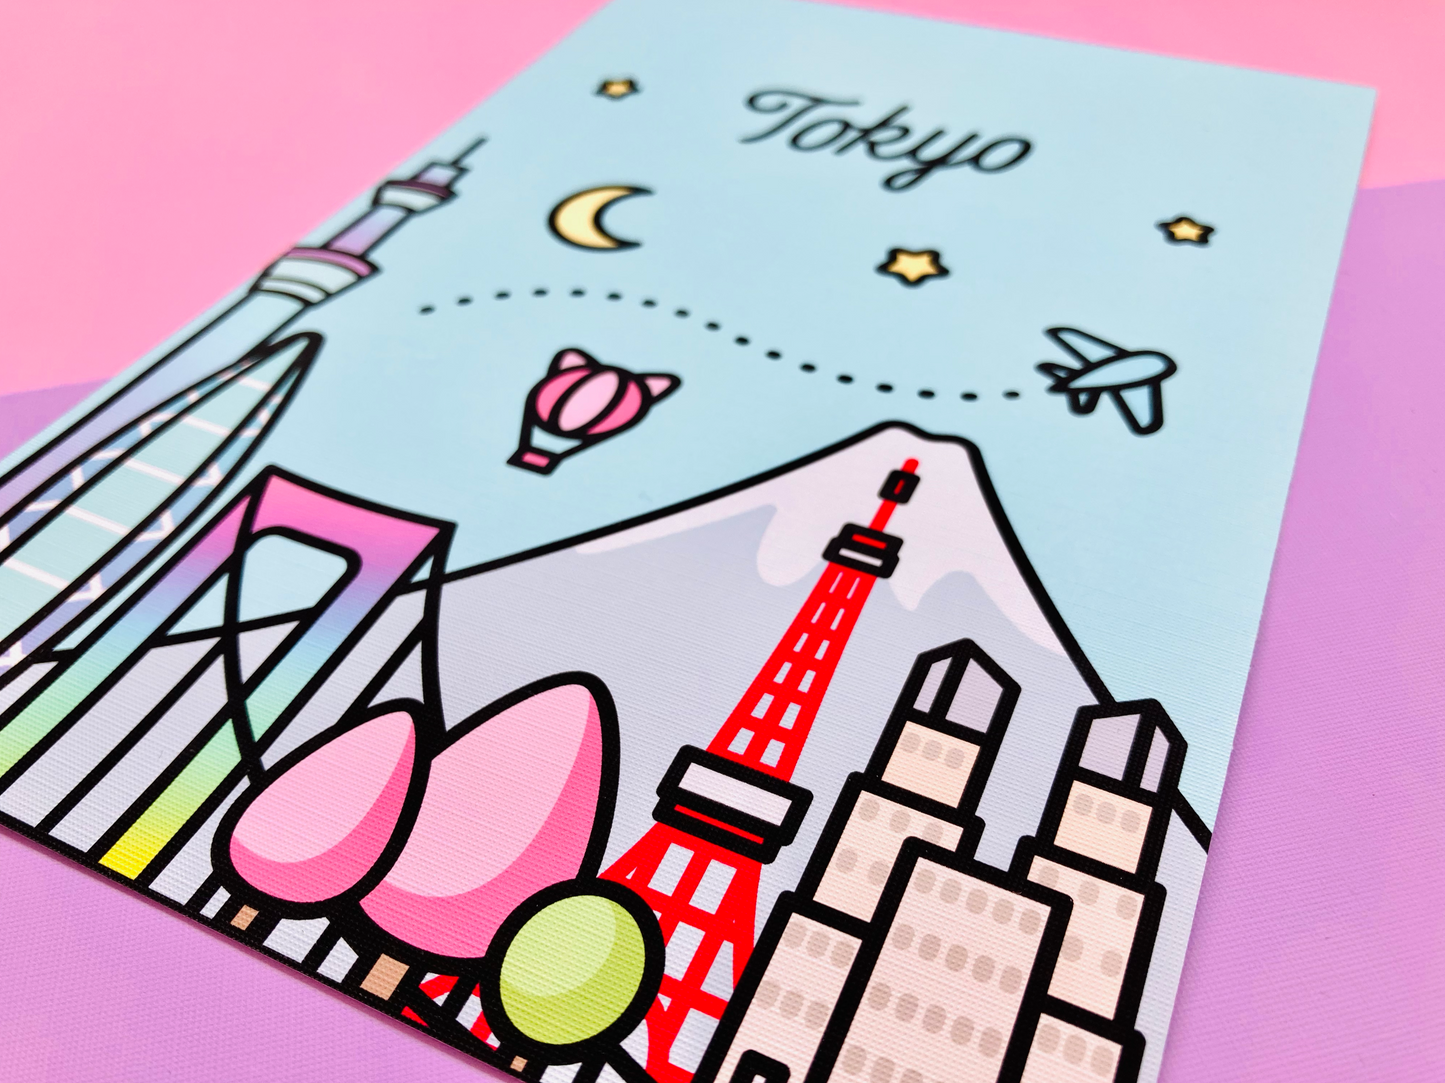 Tokyo Skyline Art Print